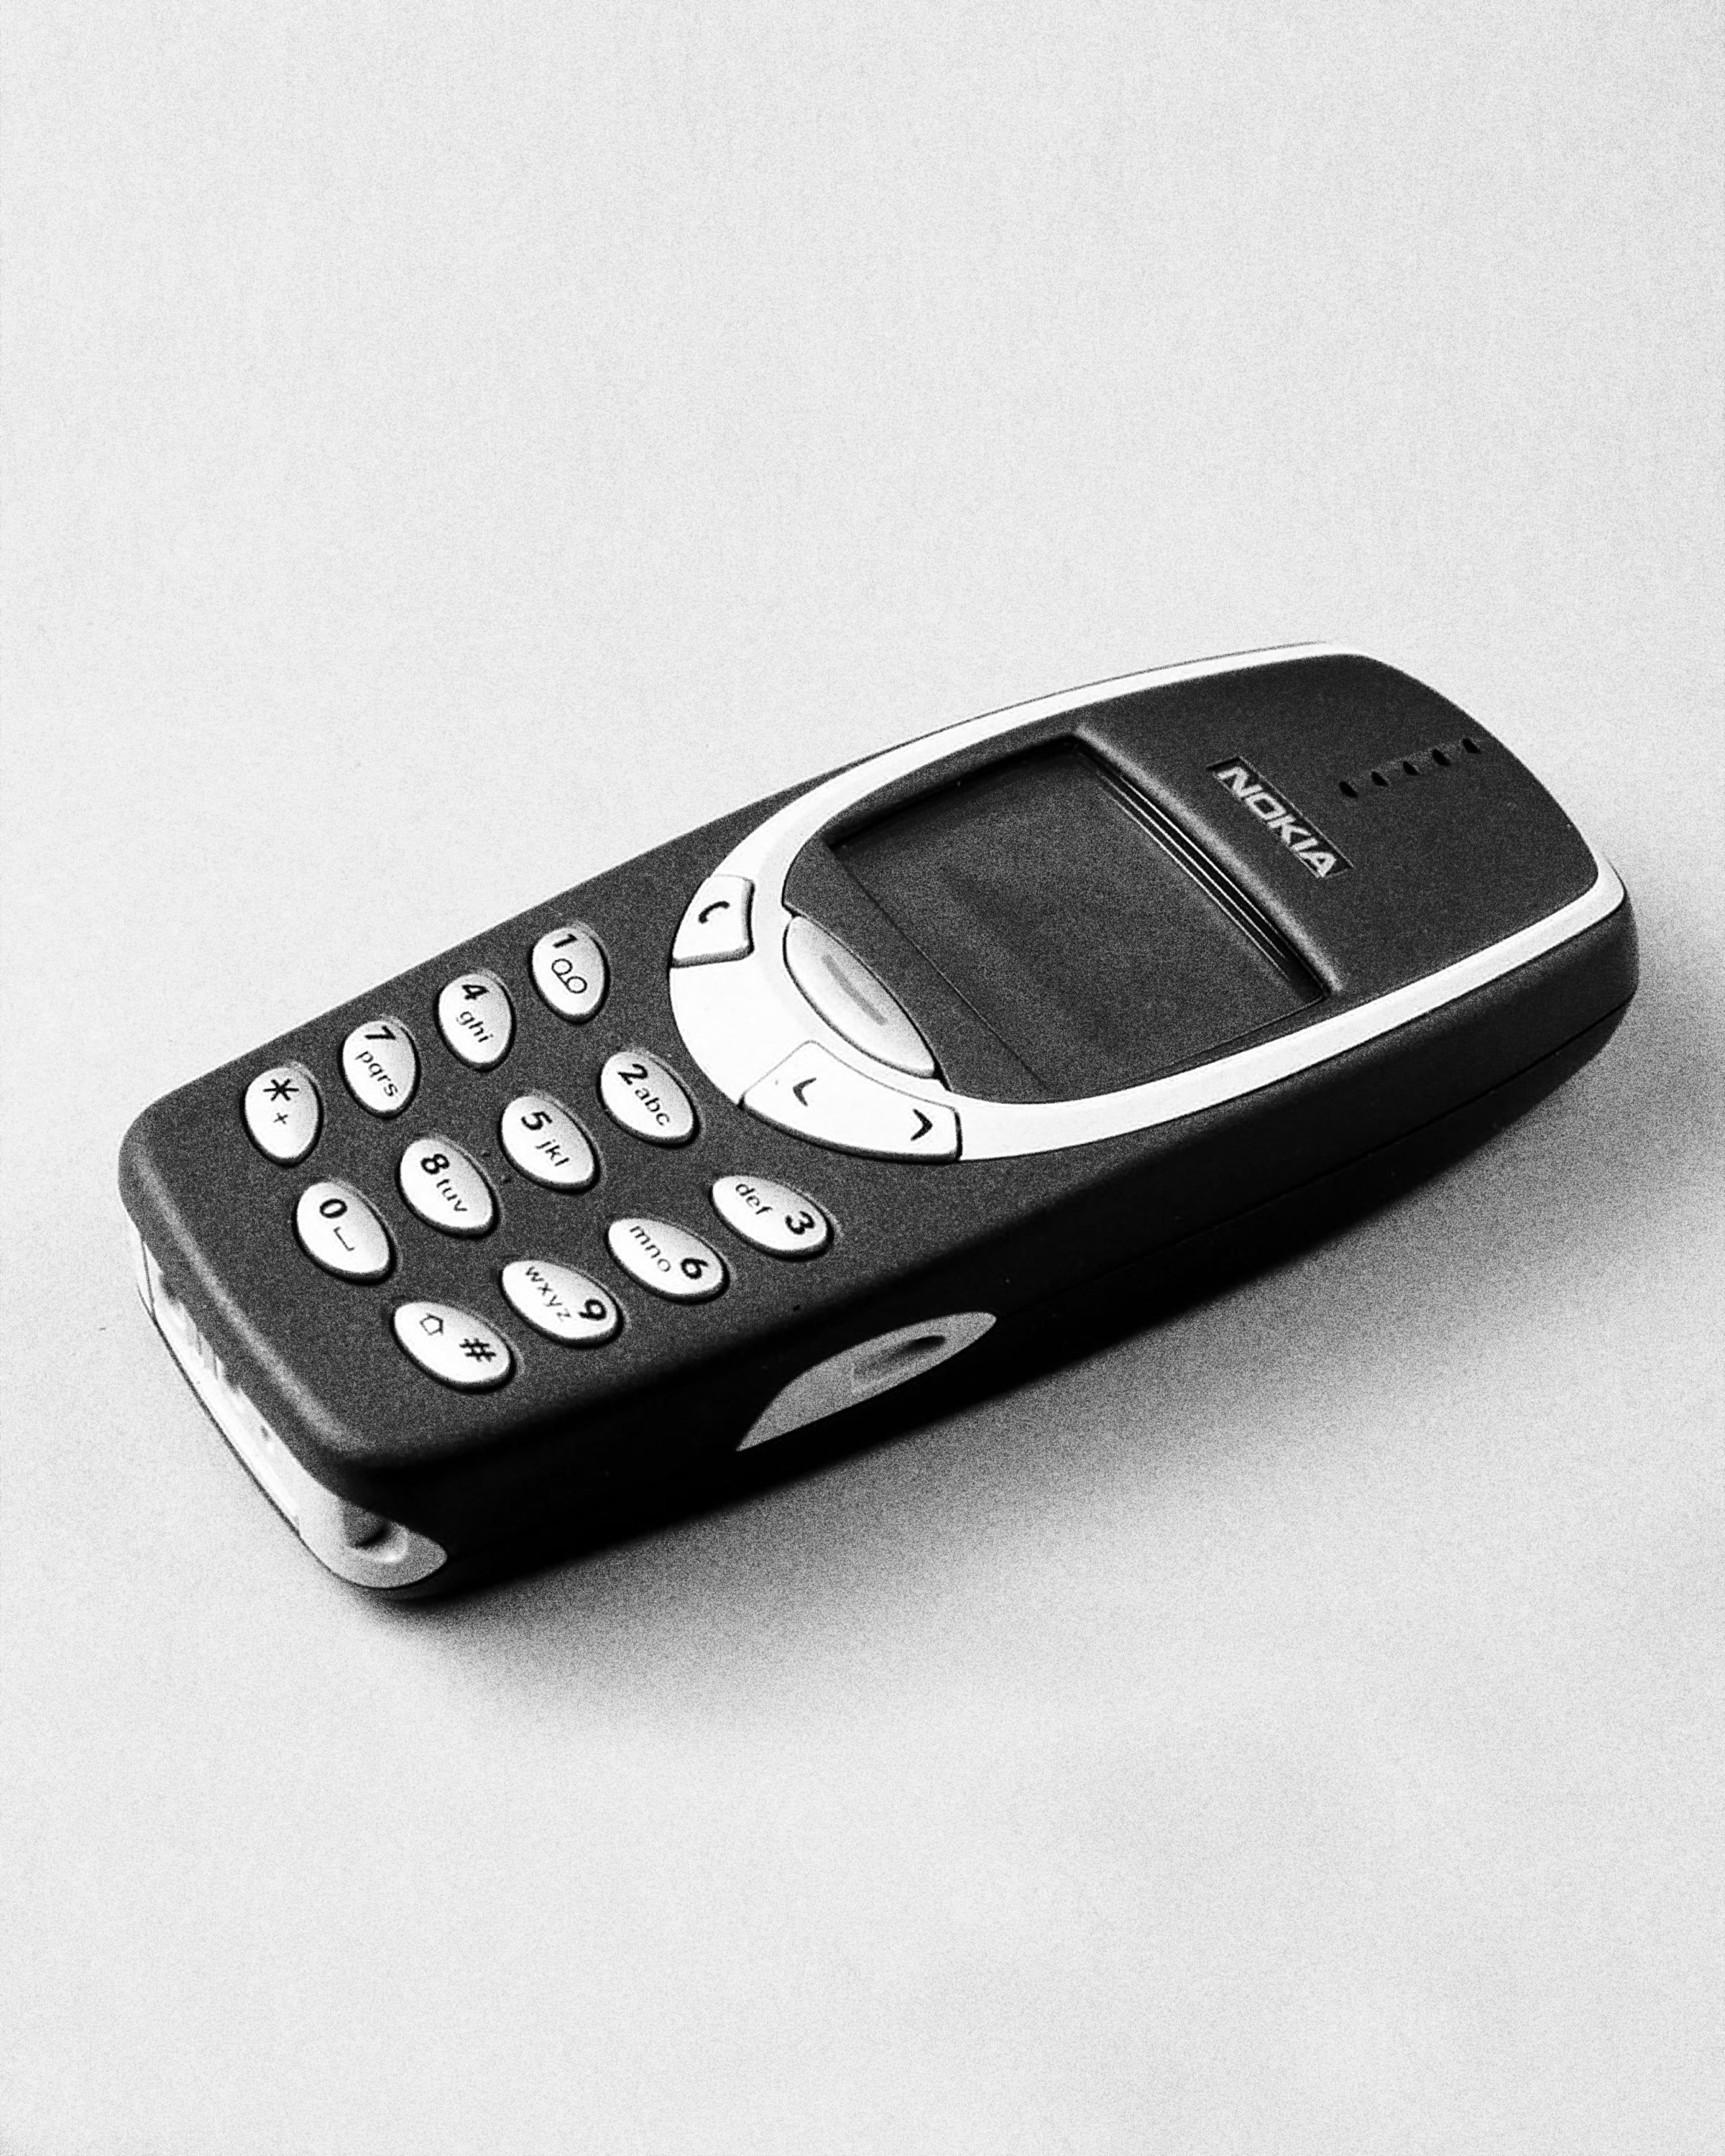 Nokia - 3310 Mobile Phone